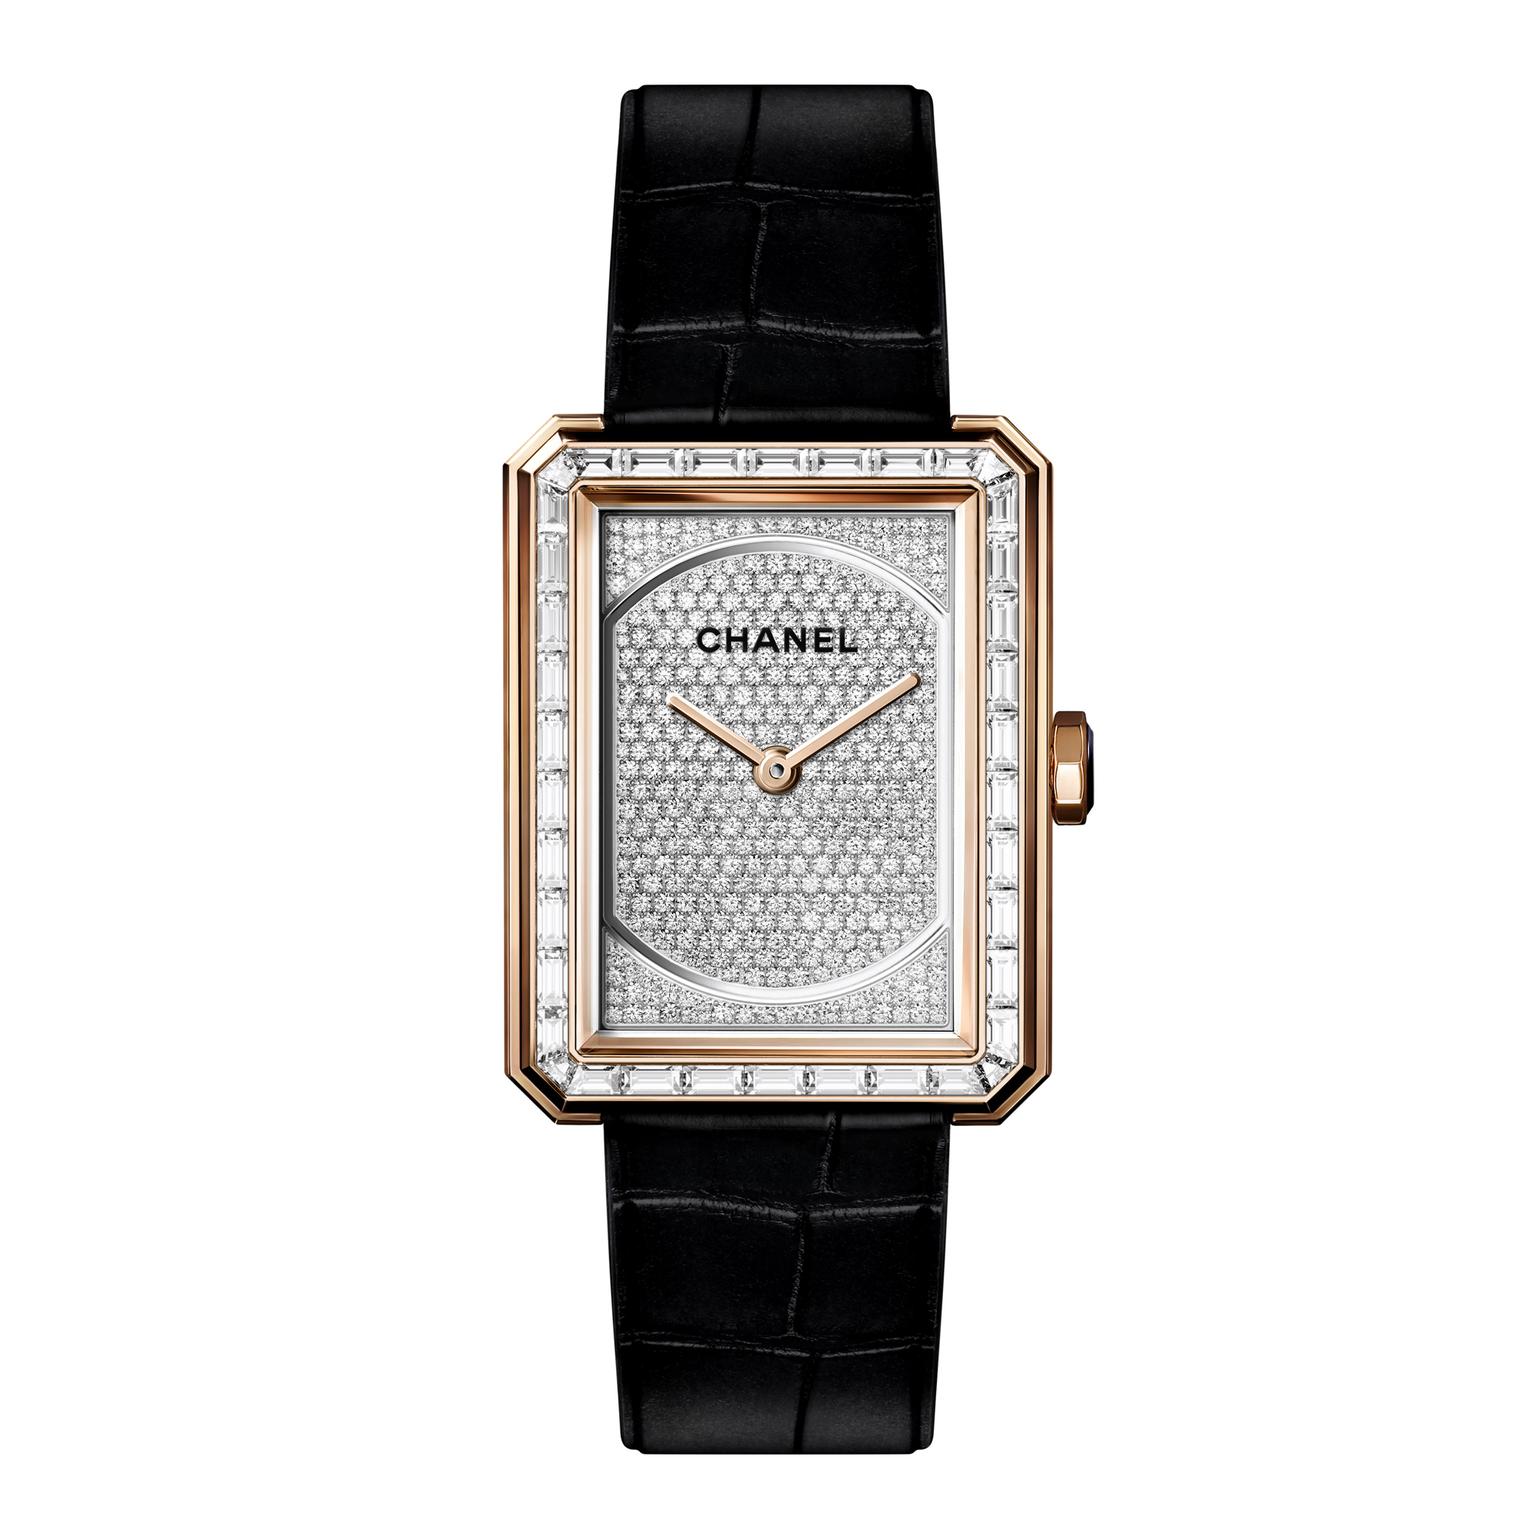 Chanel H4888 fond blanc_RVB watch